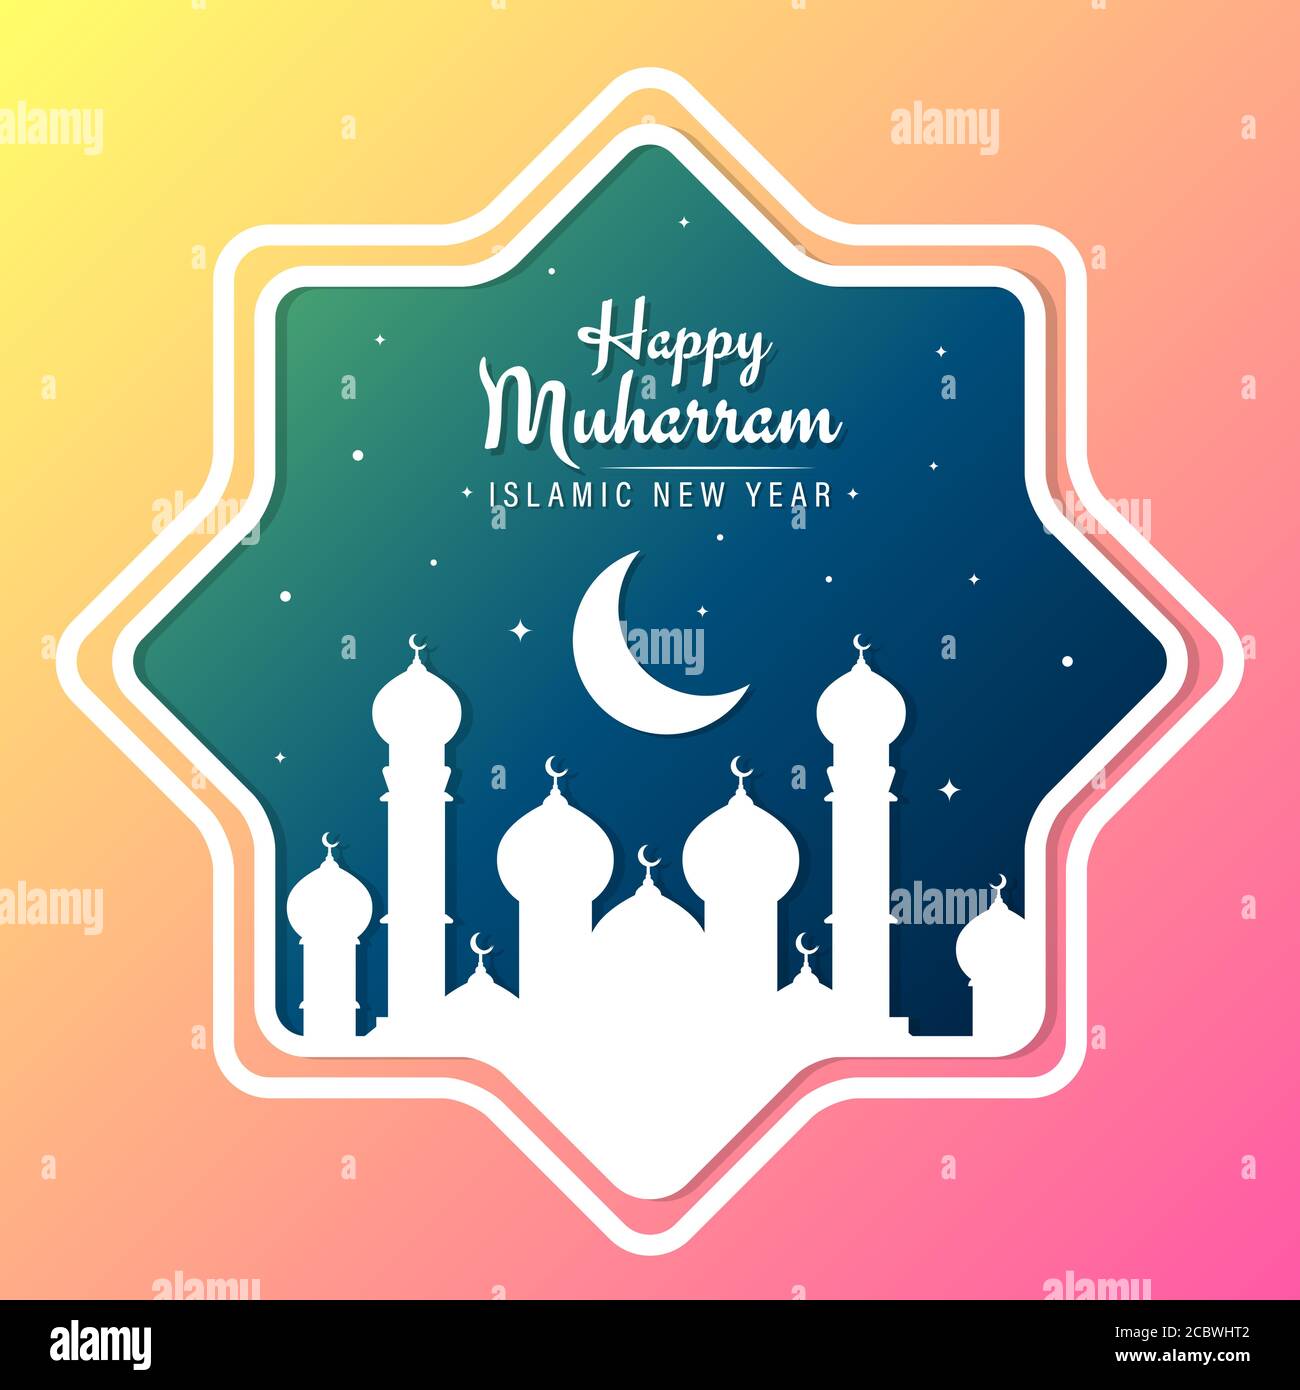 Happy Muharram, islamische Neujahr Grußkarte für Web, Illustration Vektor Stock Vektor